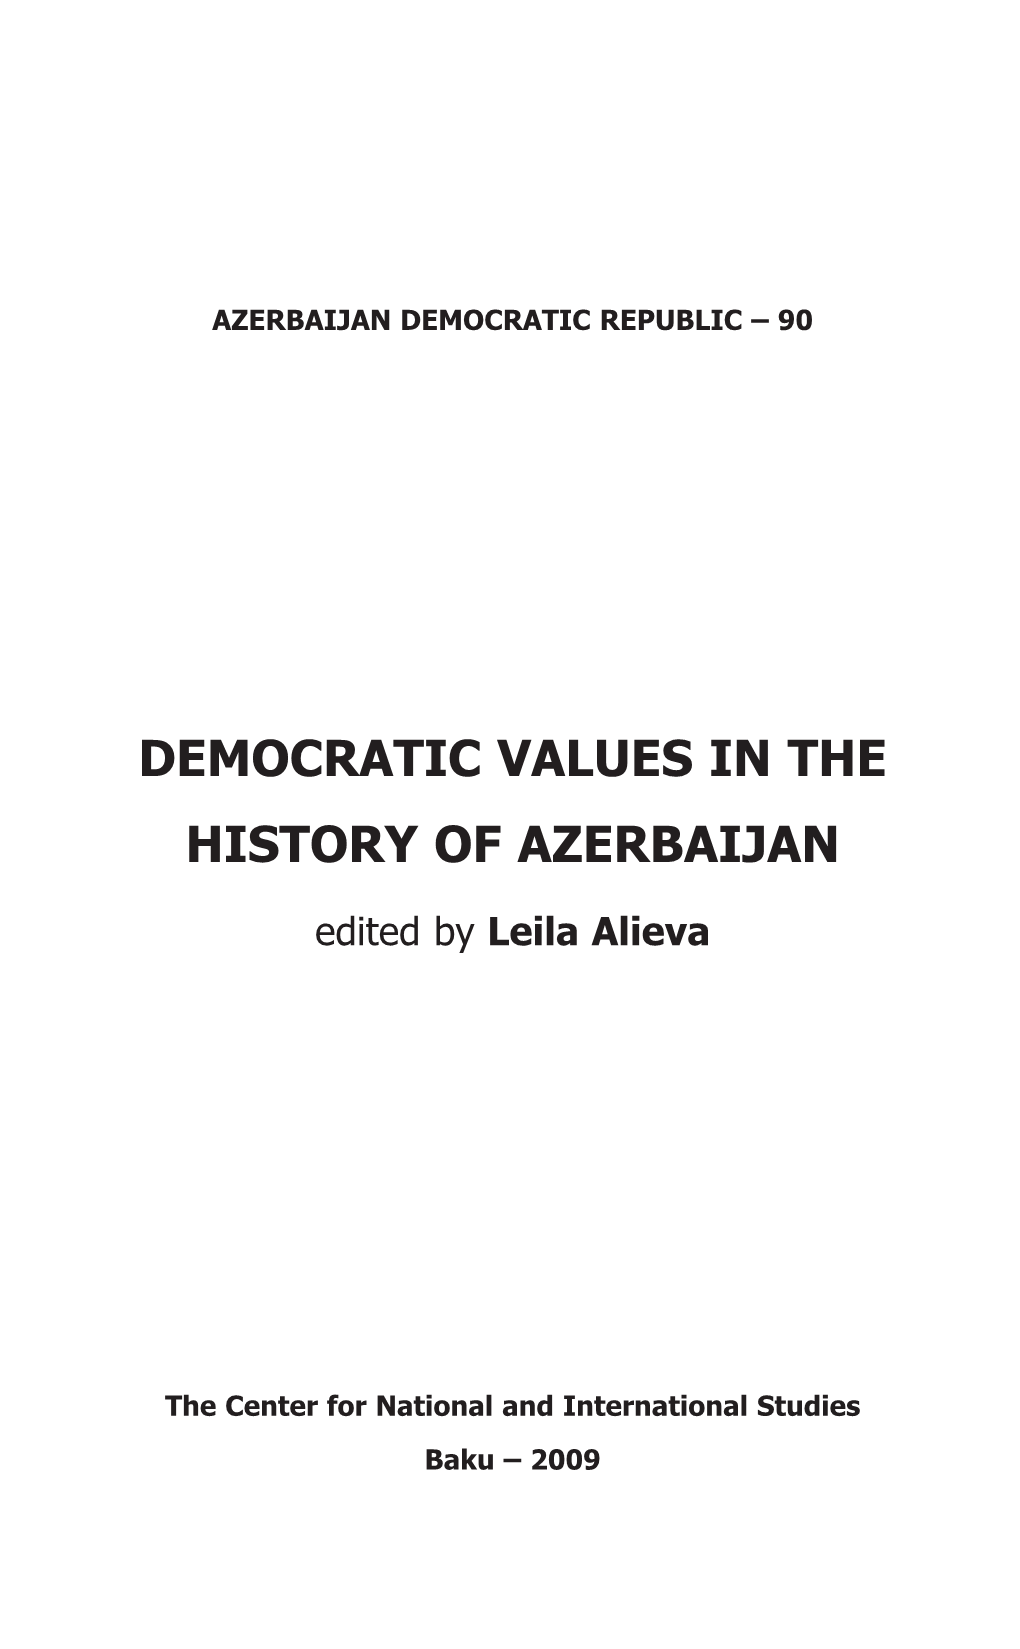 Democratic Values in the History of Azerbaijan